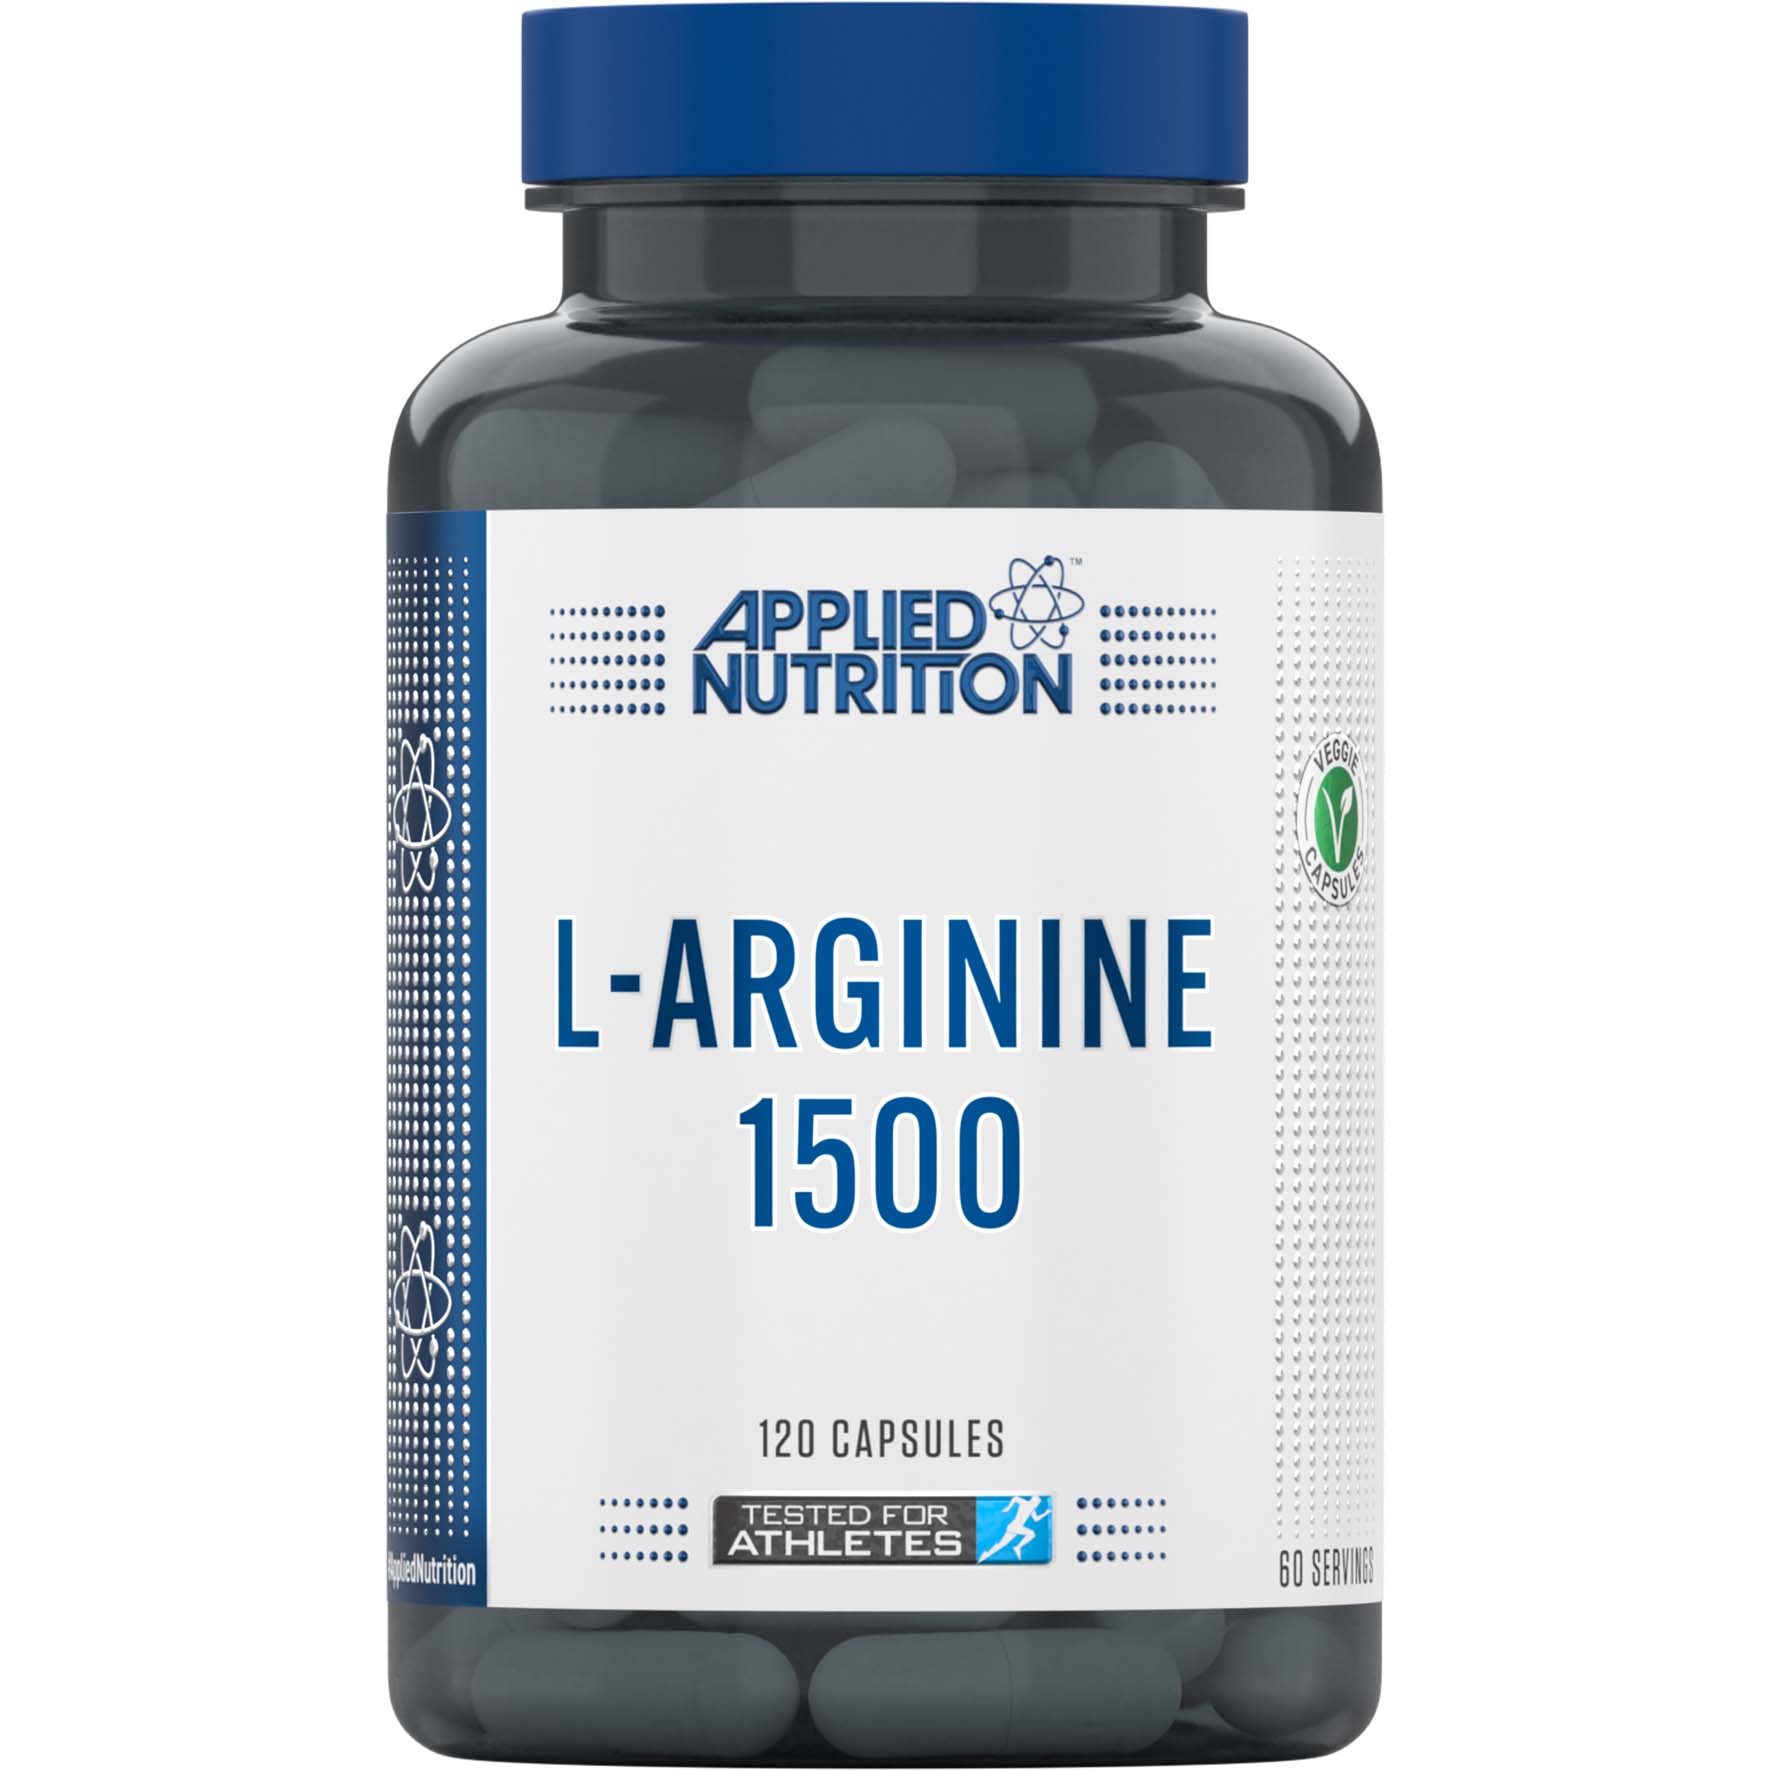 Applied Nutrition L-Arginine 120 Capsules 1500 mg